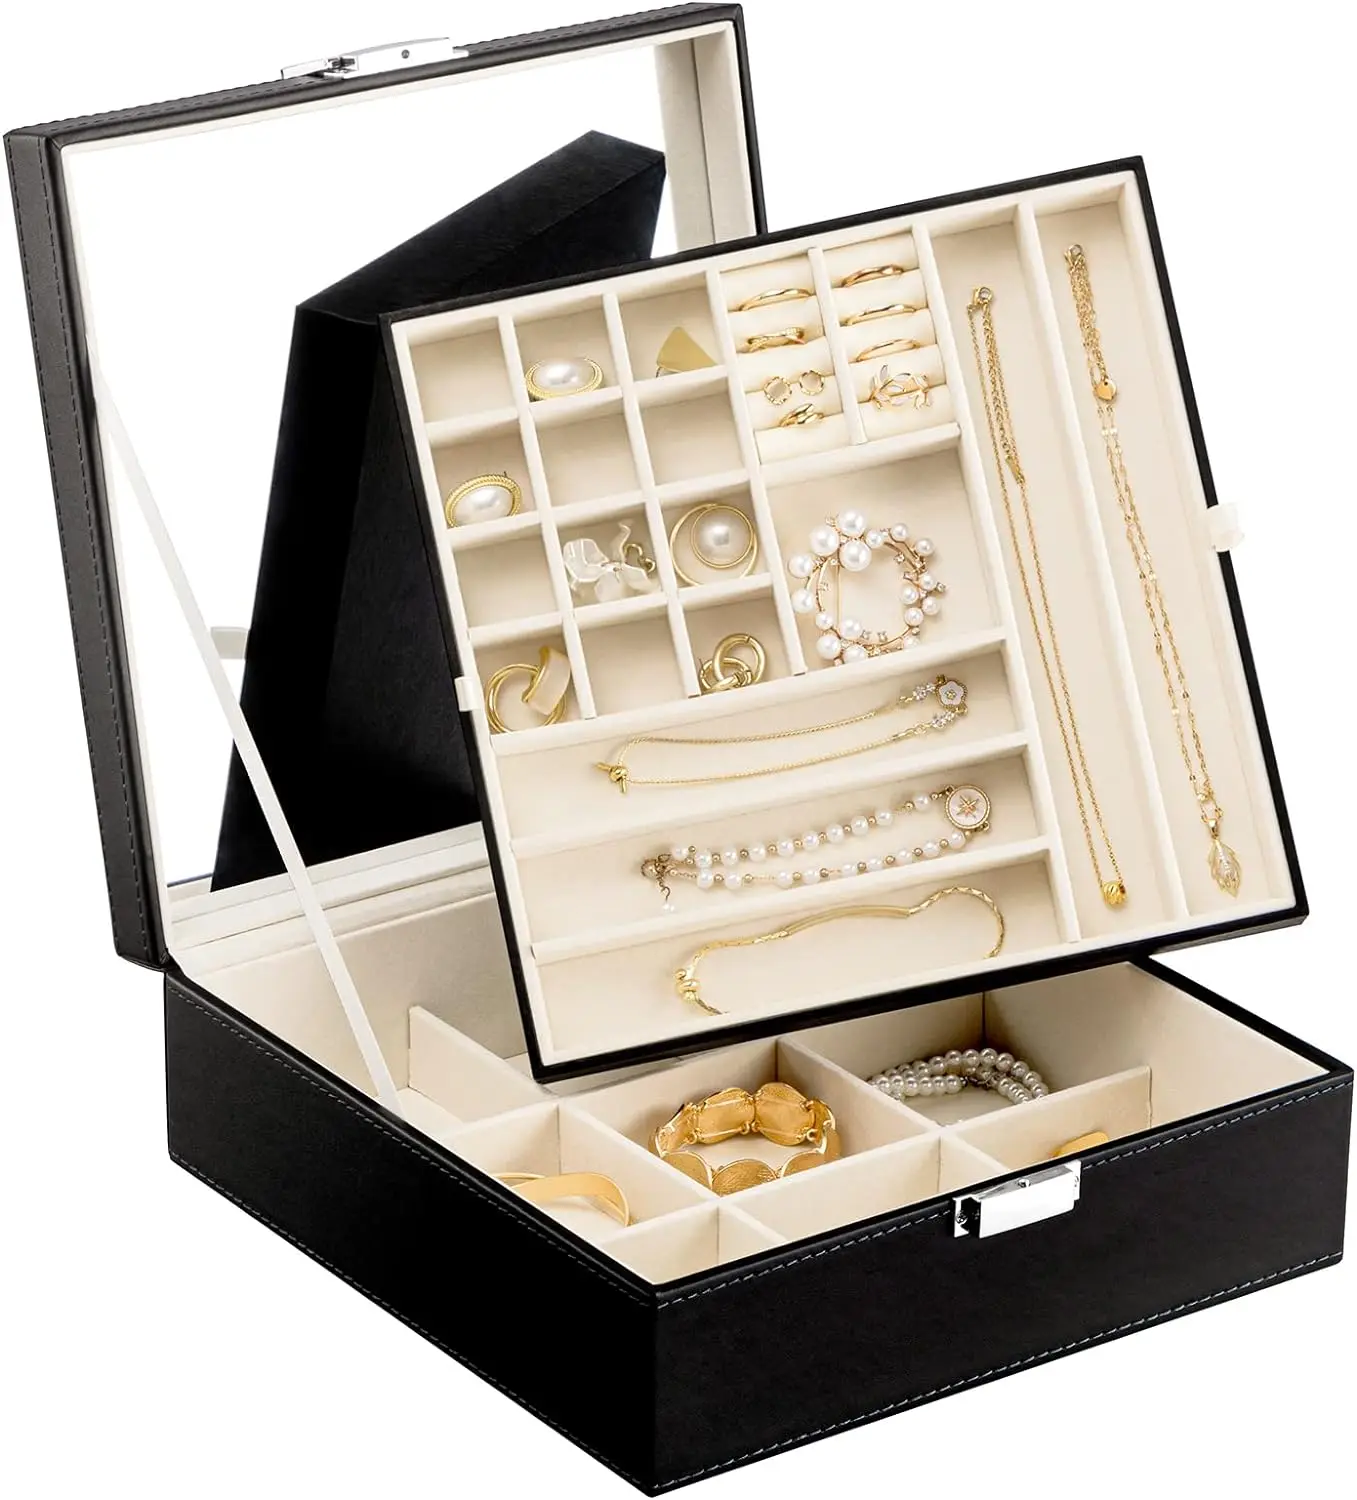 

Portable Jewelry Box Jewelry Organizer Display Travel Jewelry Case Boxes Waterproof Leather Storage Zipper Jewelers